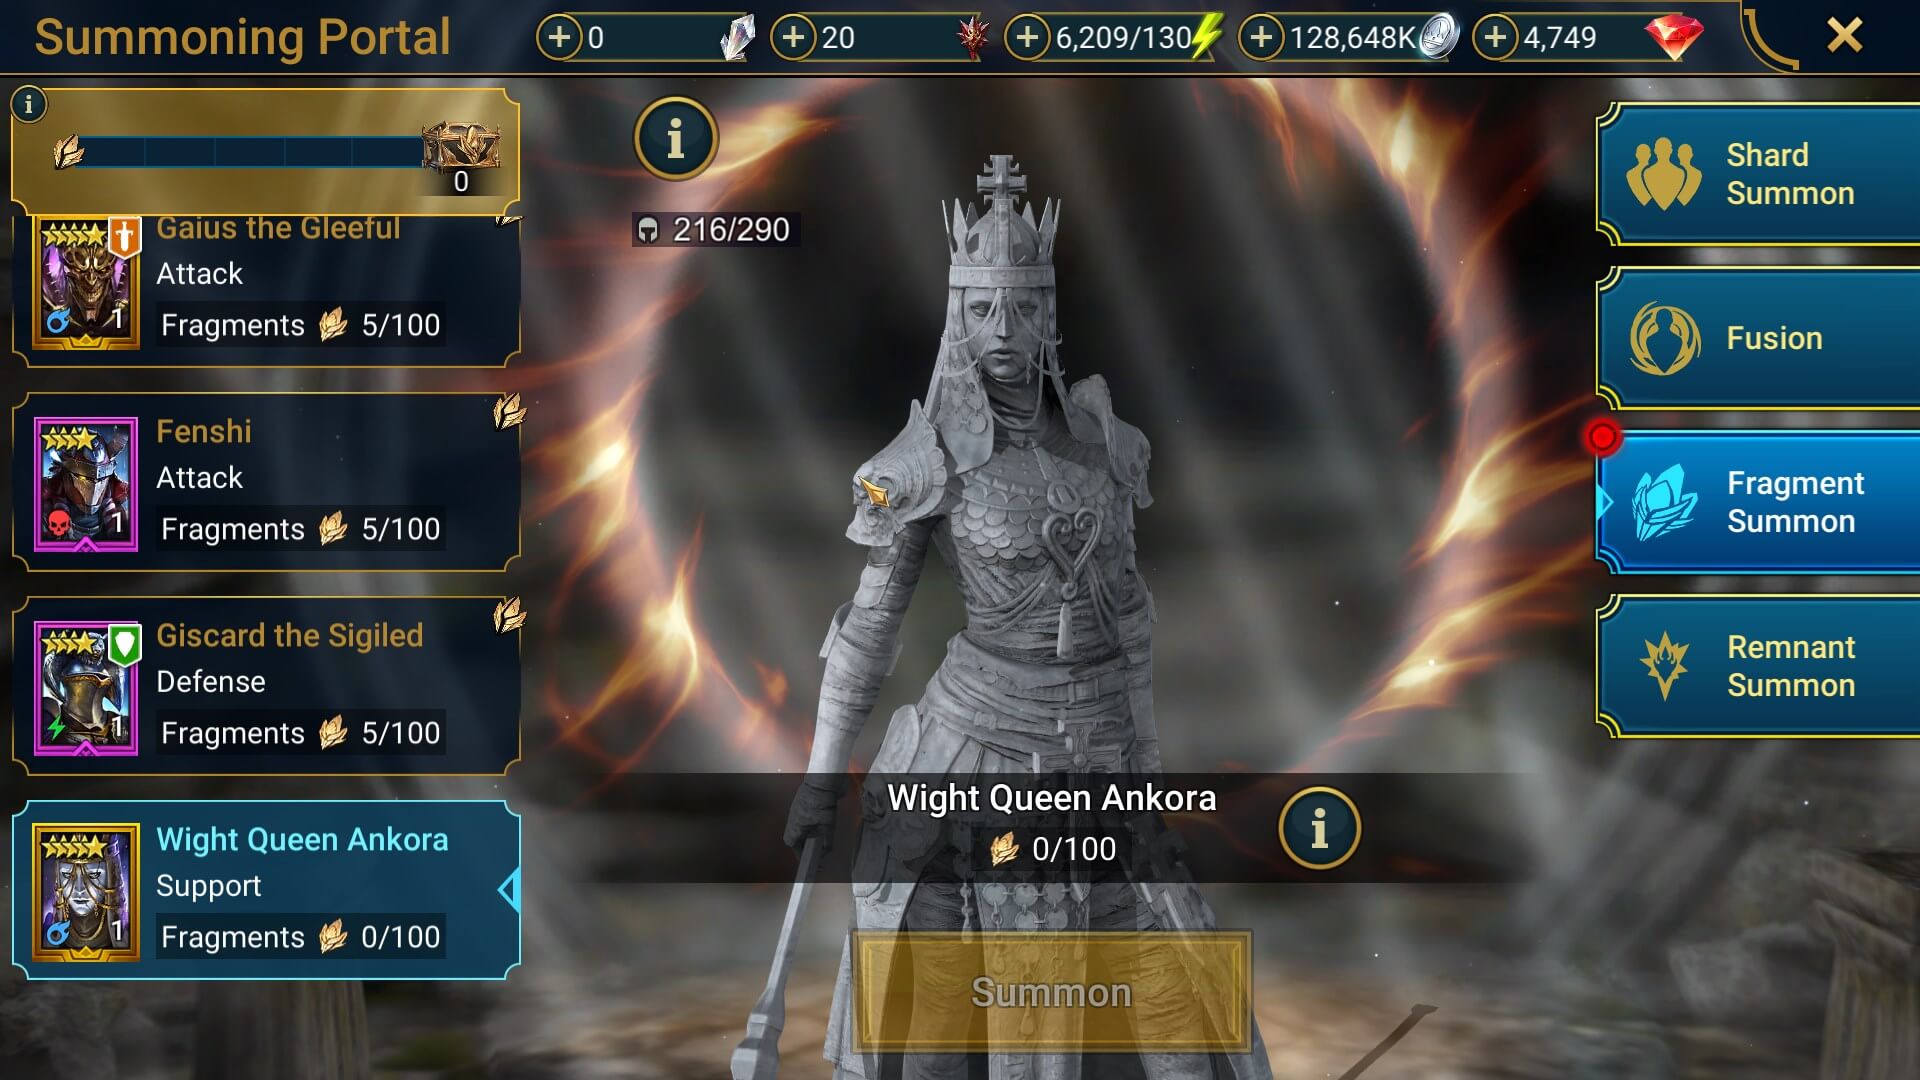 Wight Queen Ankora unclaimed in summoning portal